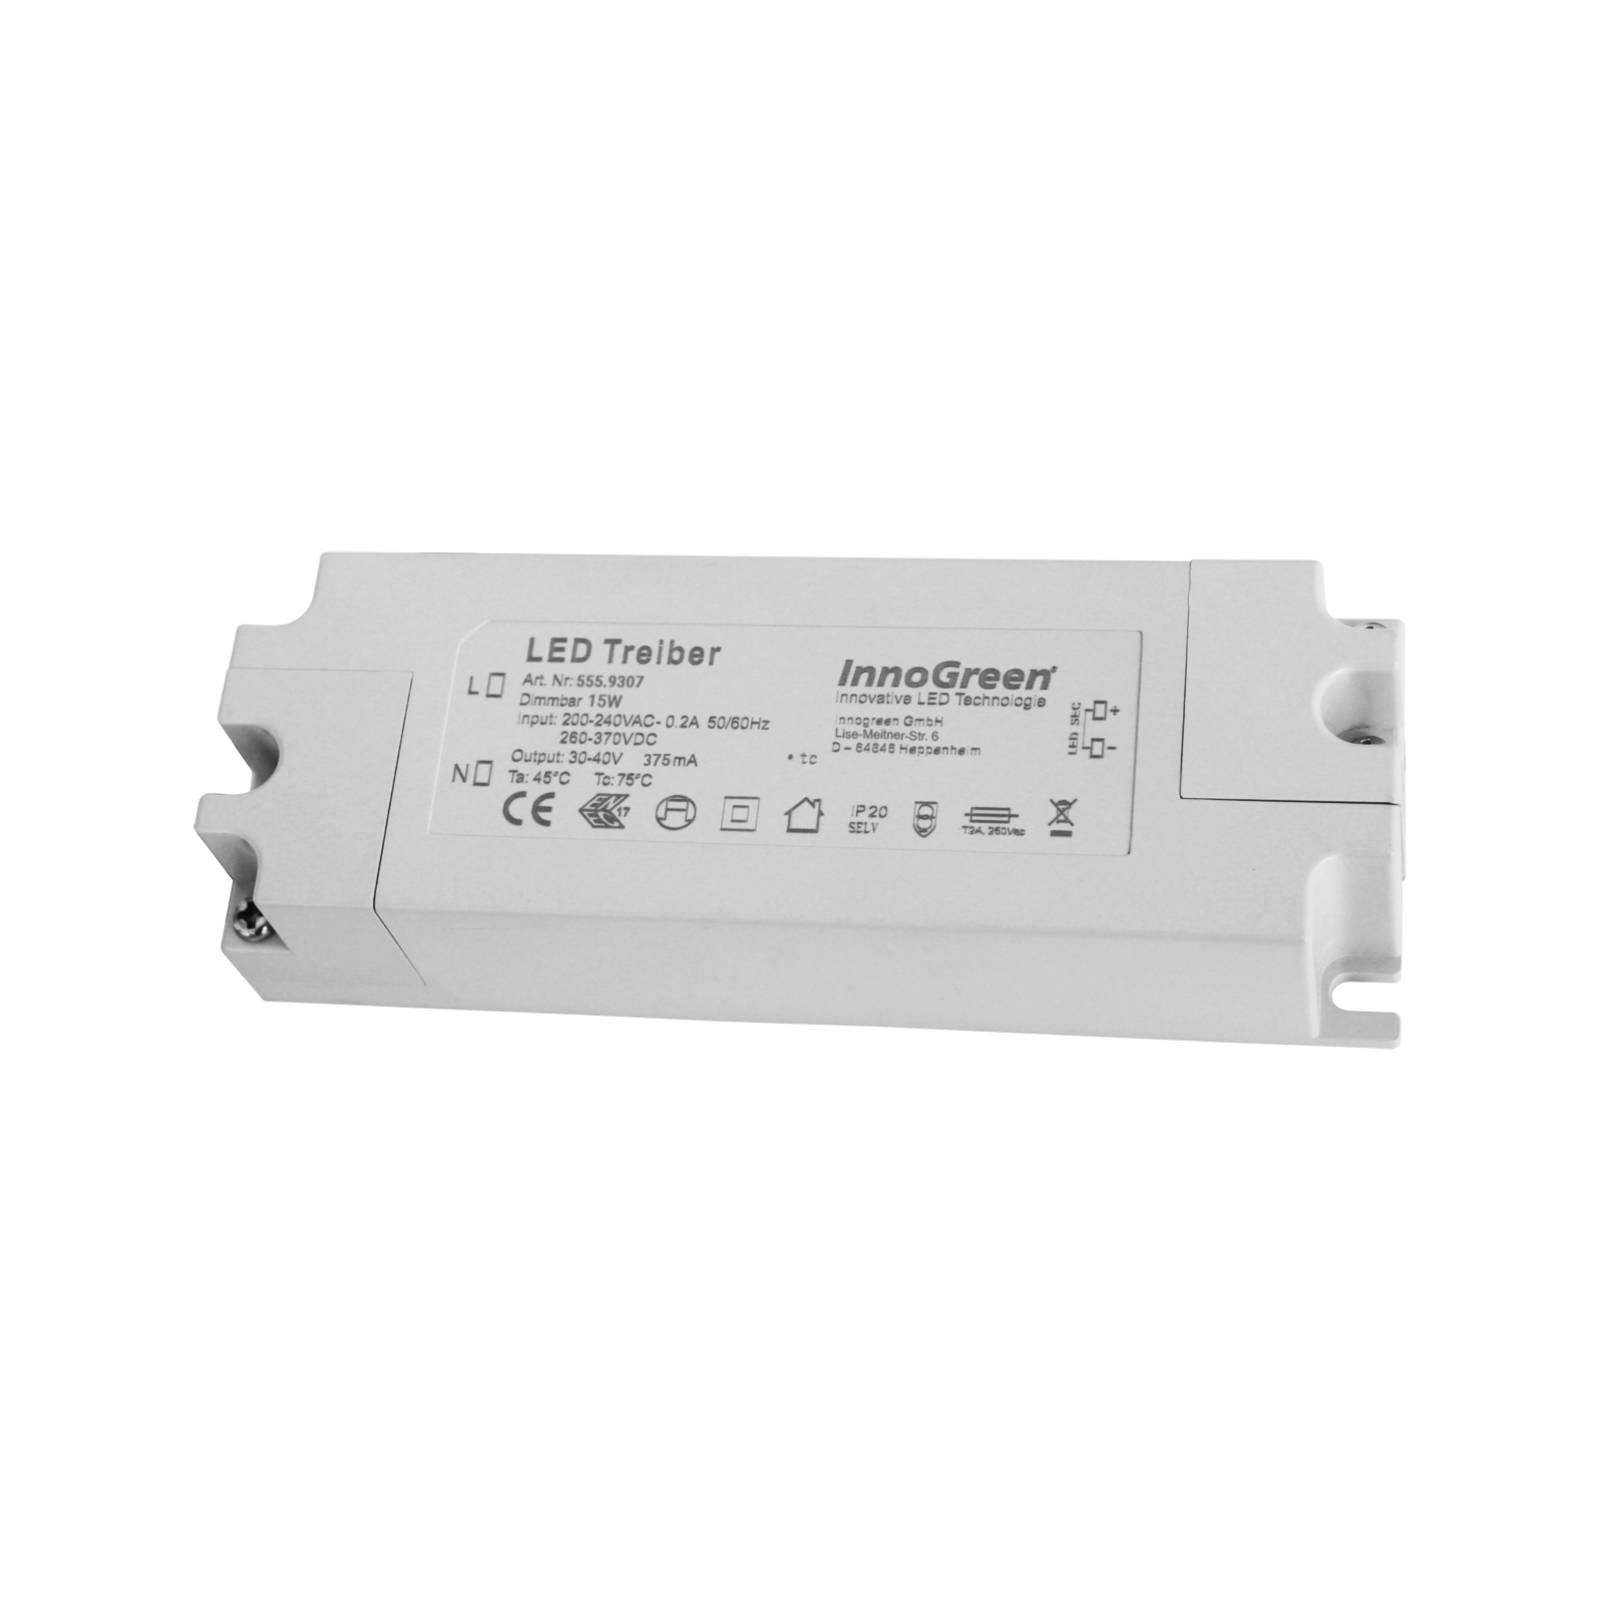 InnoGreen LED-drivare 220-240 V (AC/DC) dimbar 15W